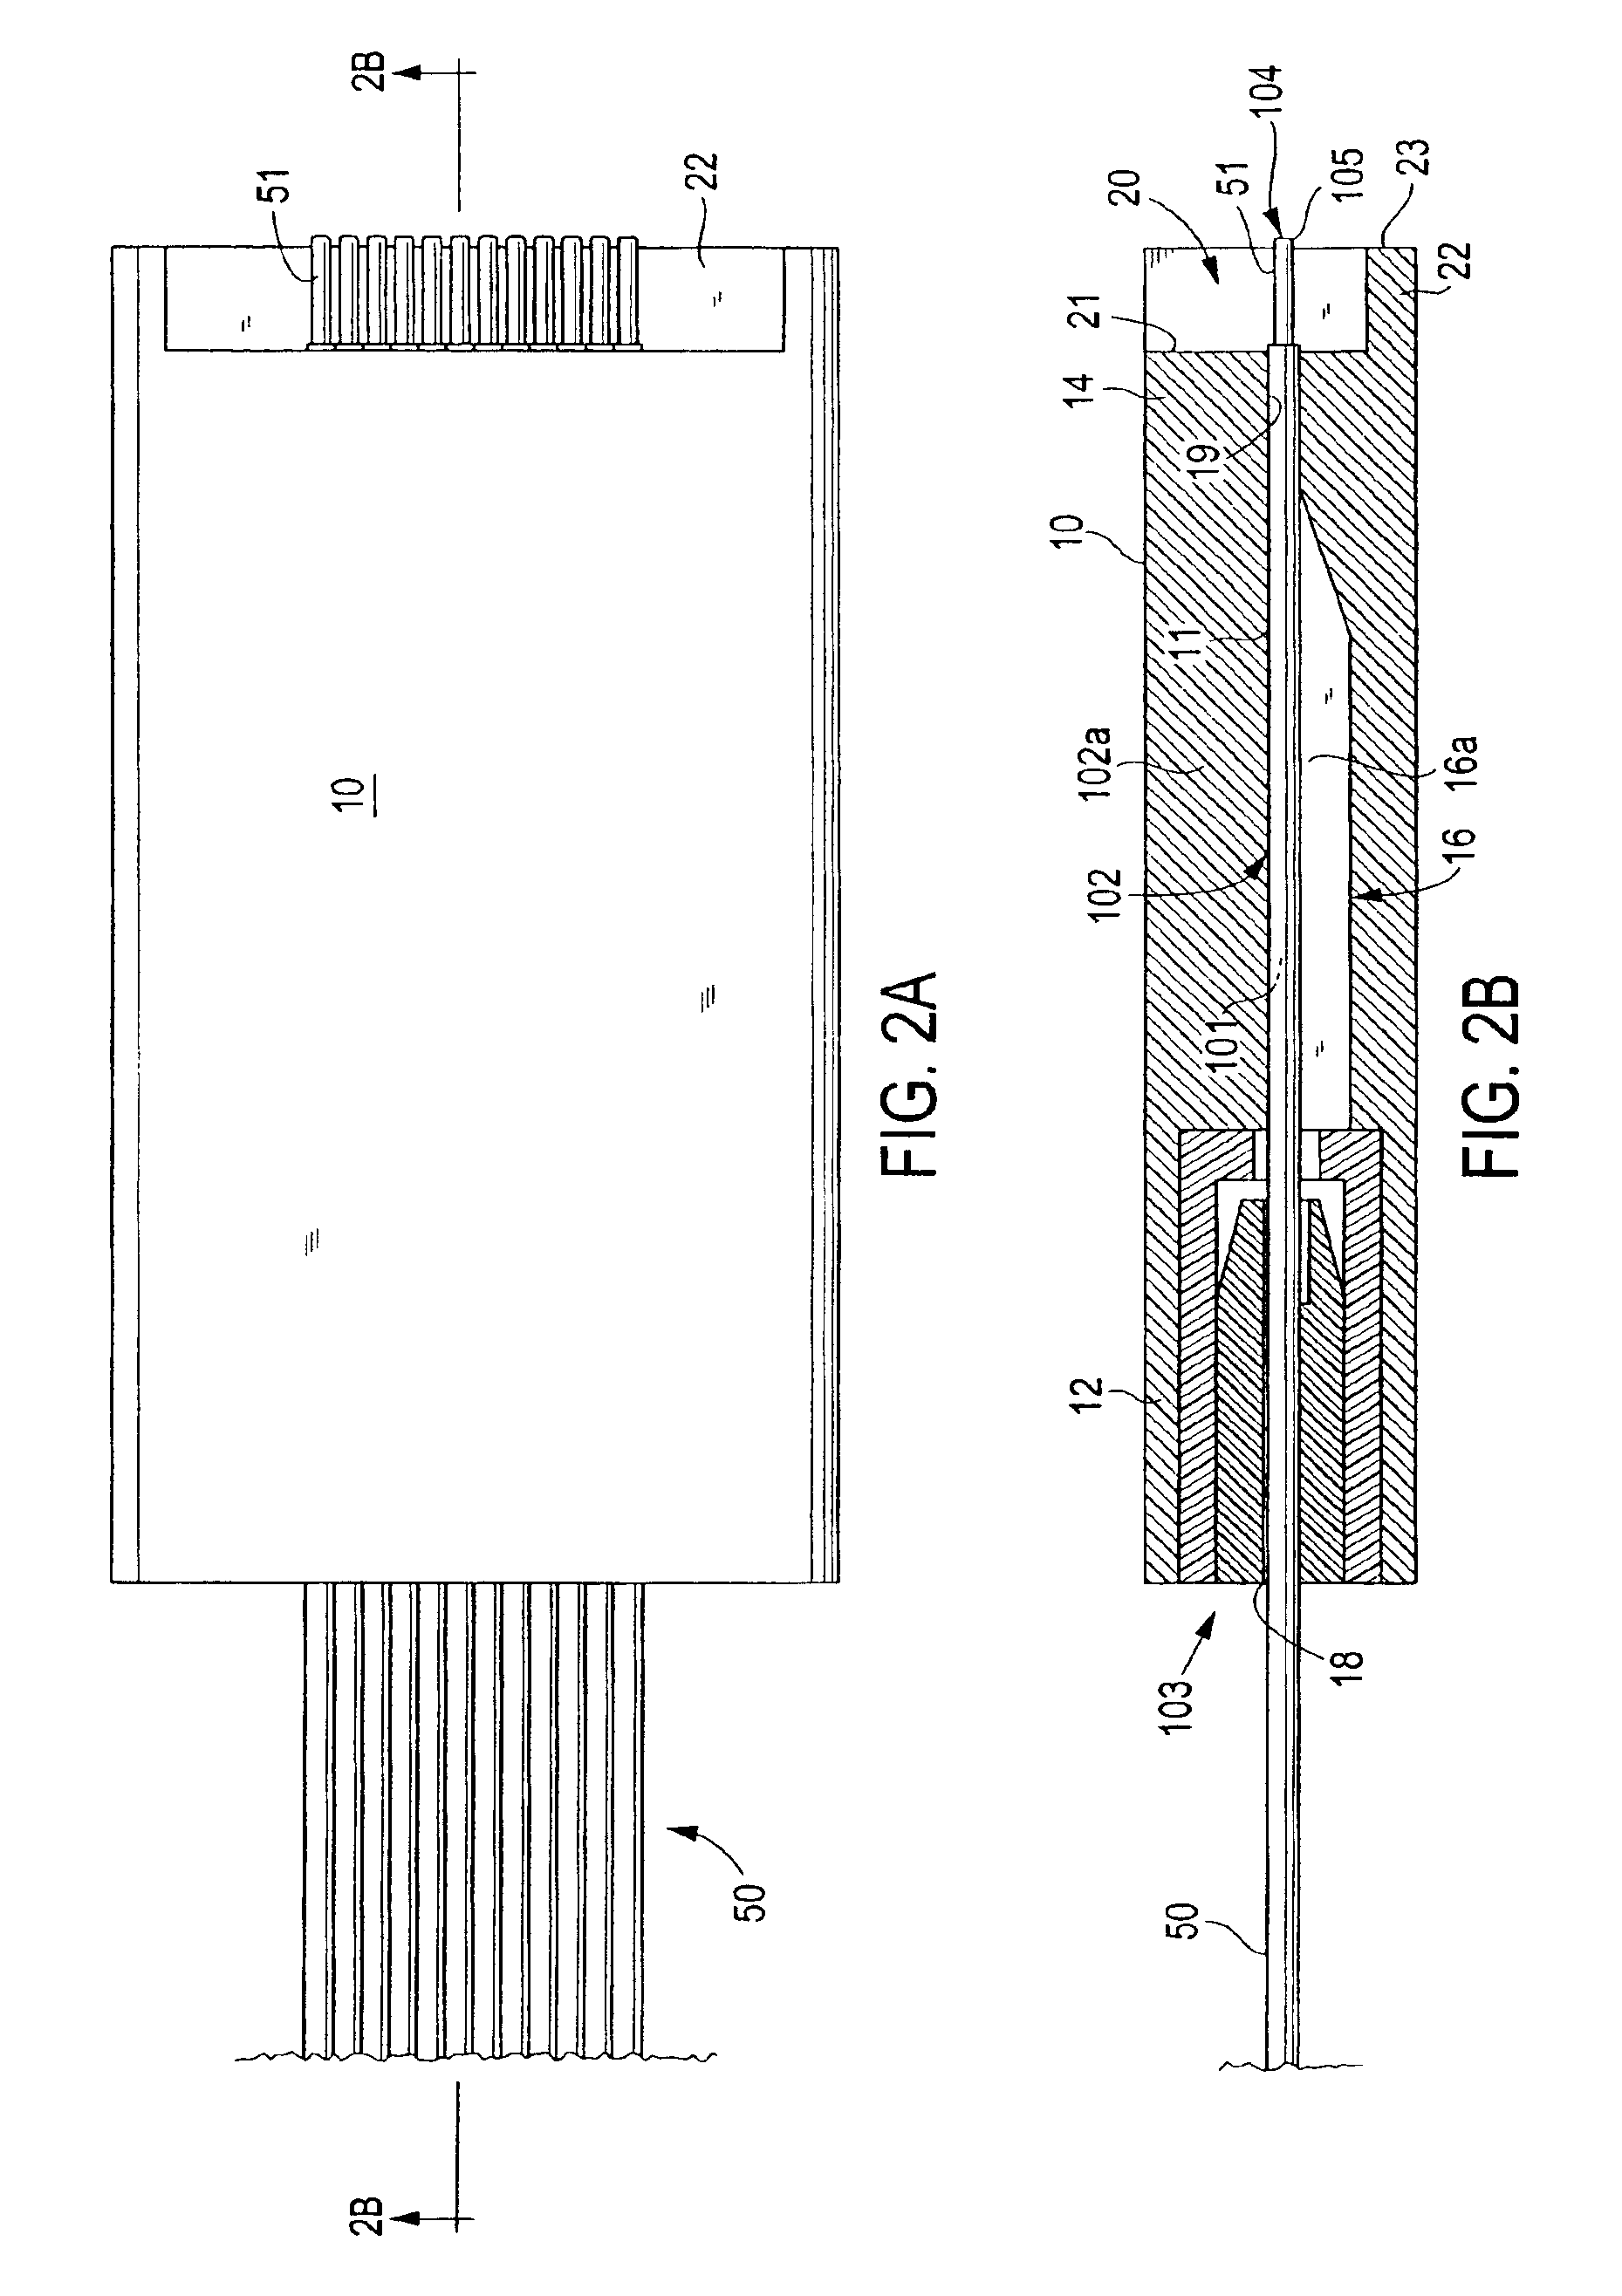 Optical ferrule-less connector